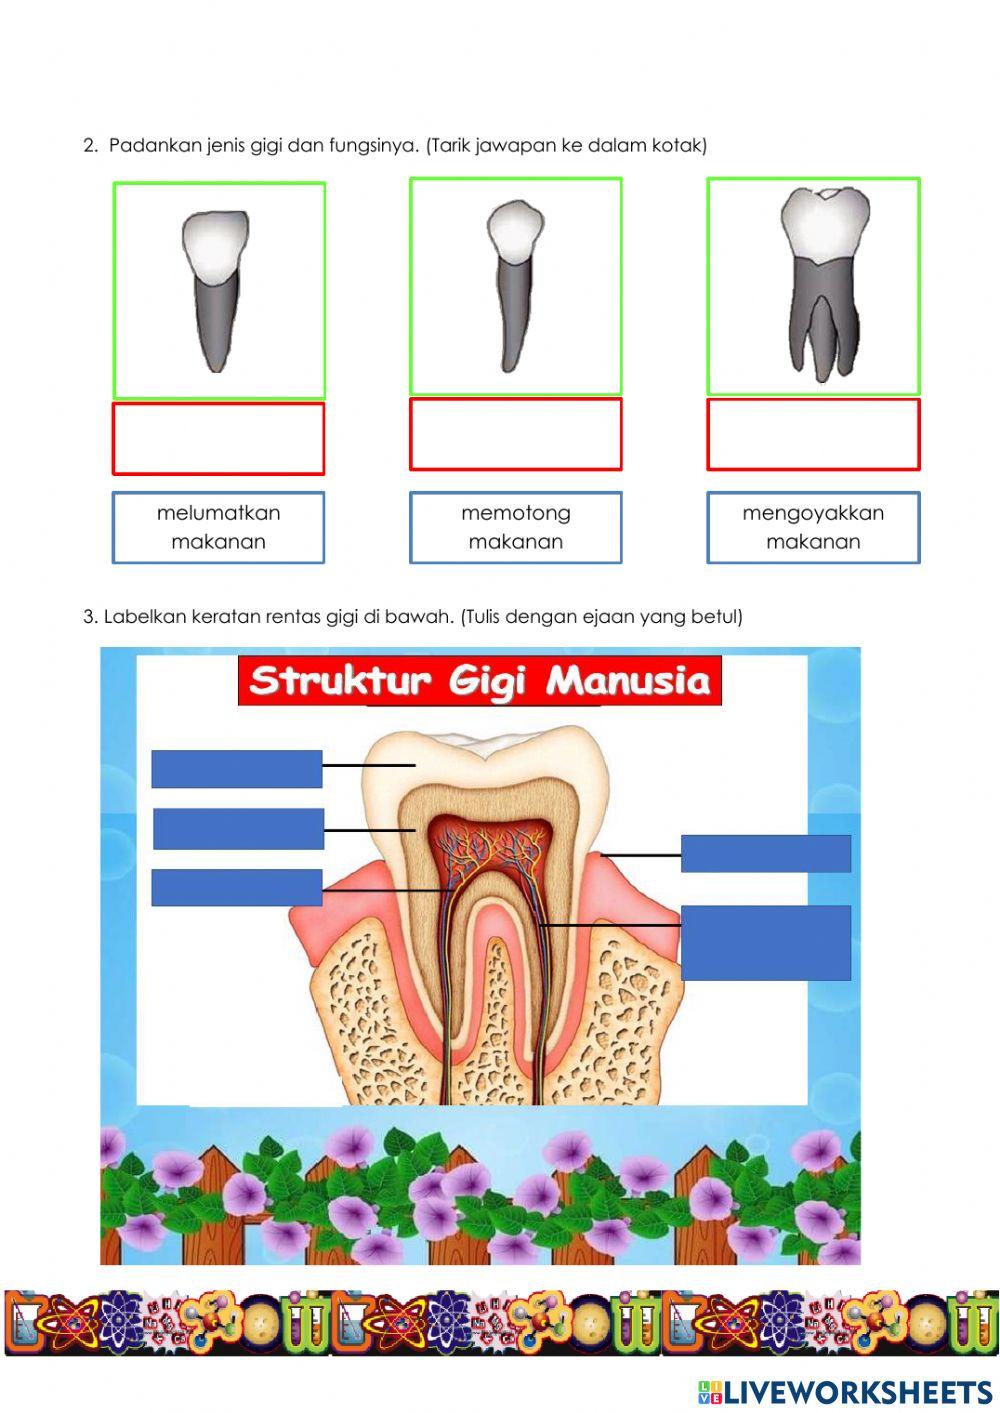 Jenis gigi,fungsinya dan struktur gigi